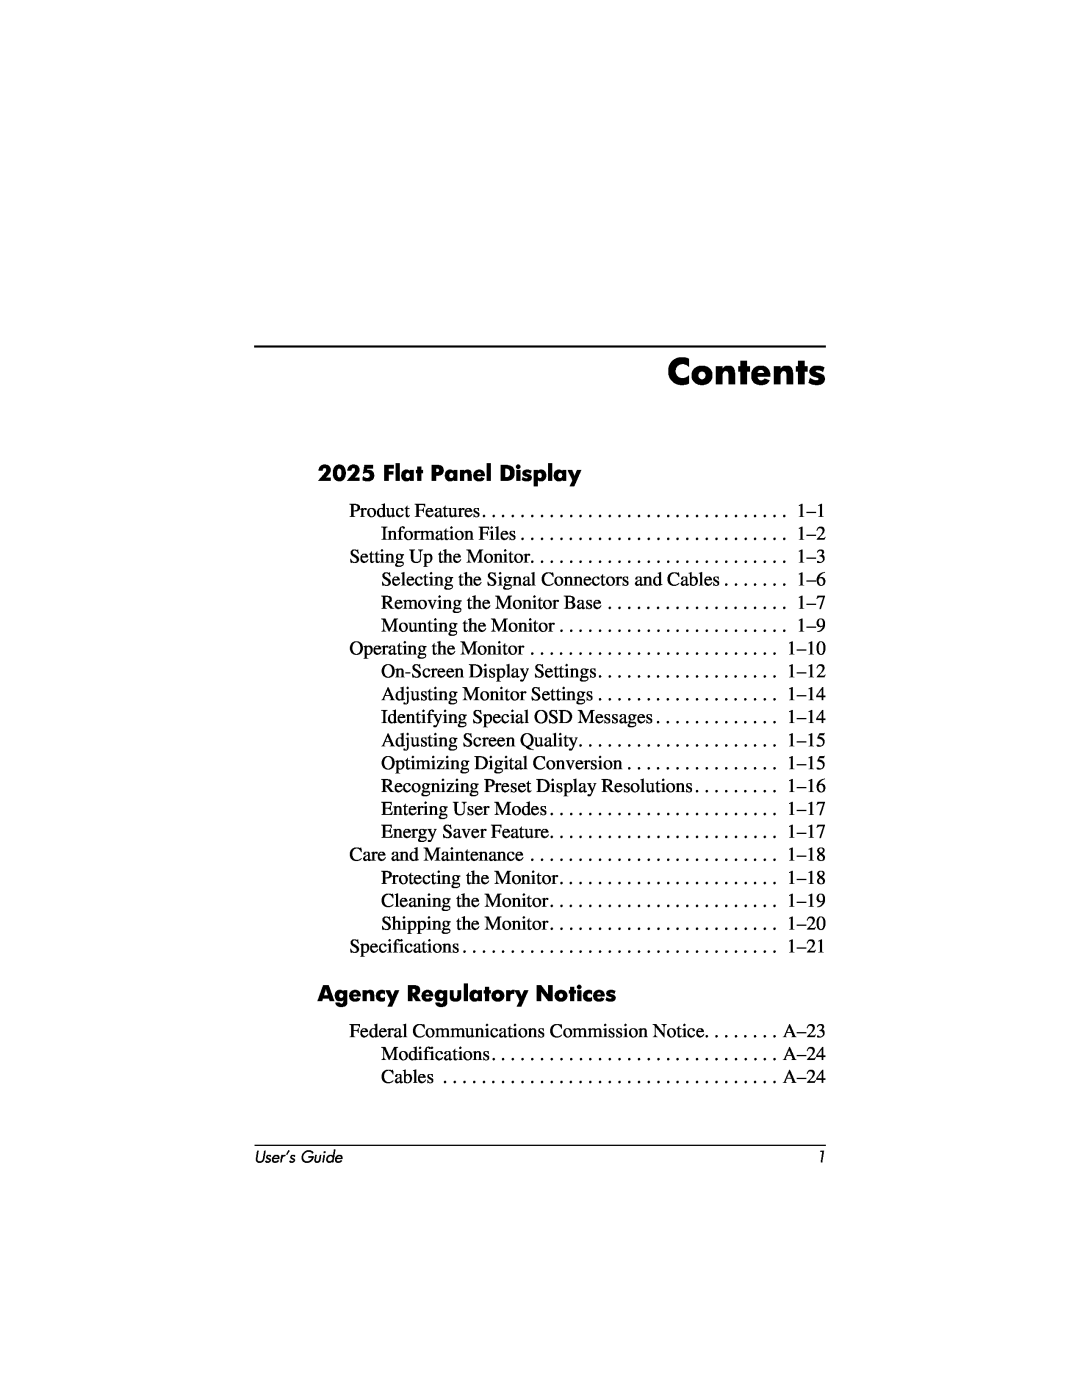 Compaq 2025 manual Contents, Flat Panel Display, Agency Regulatory Notices 